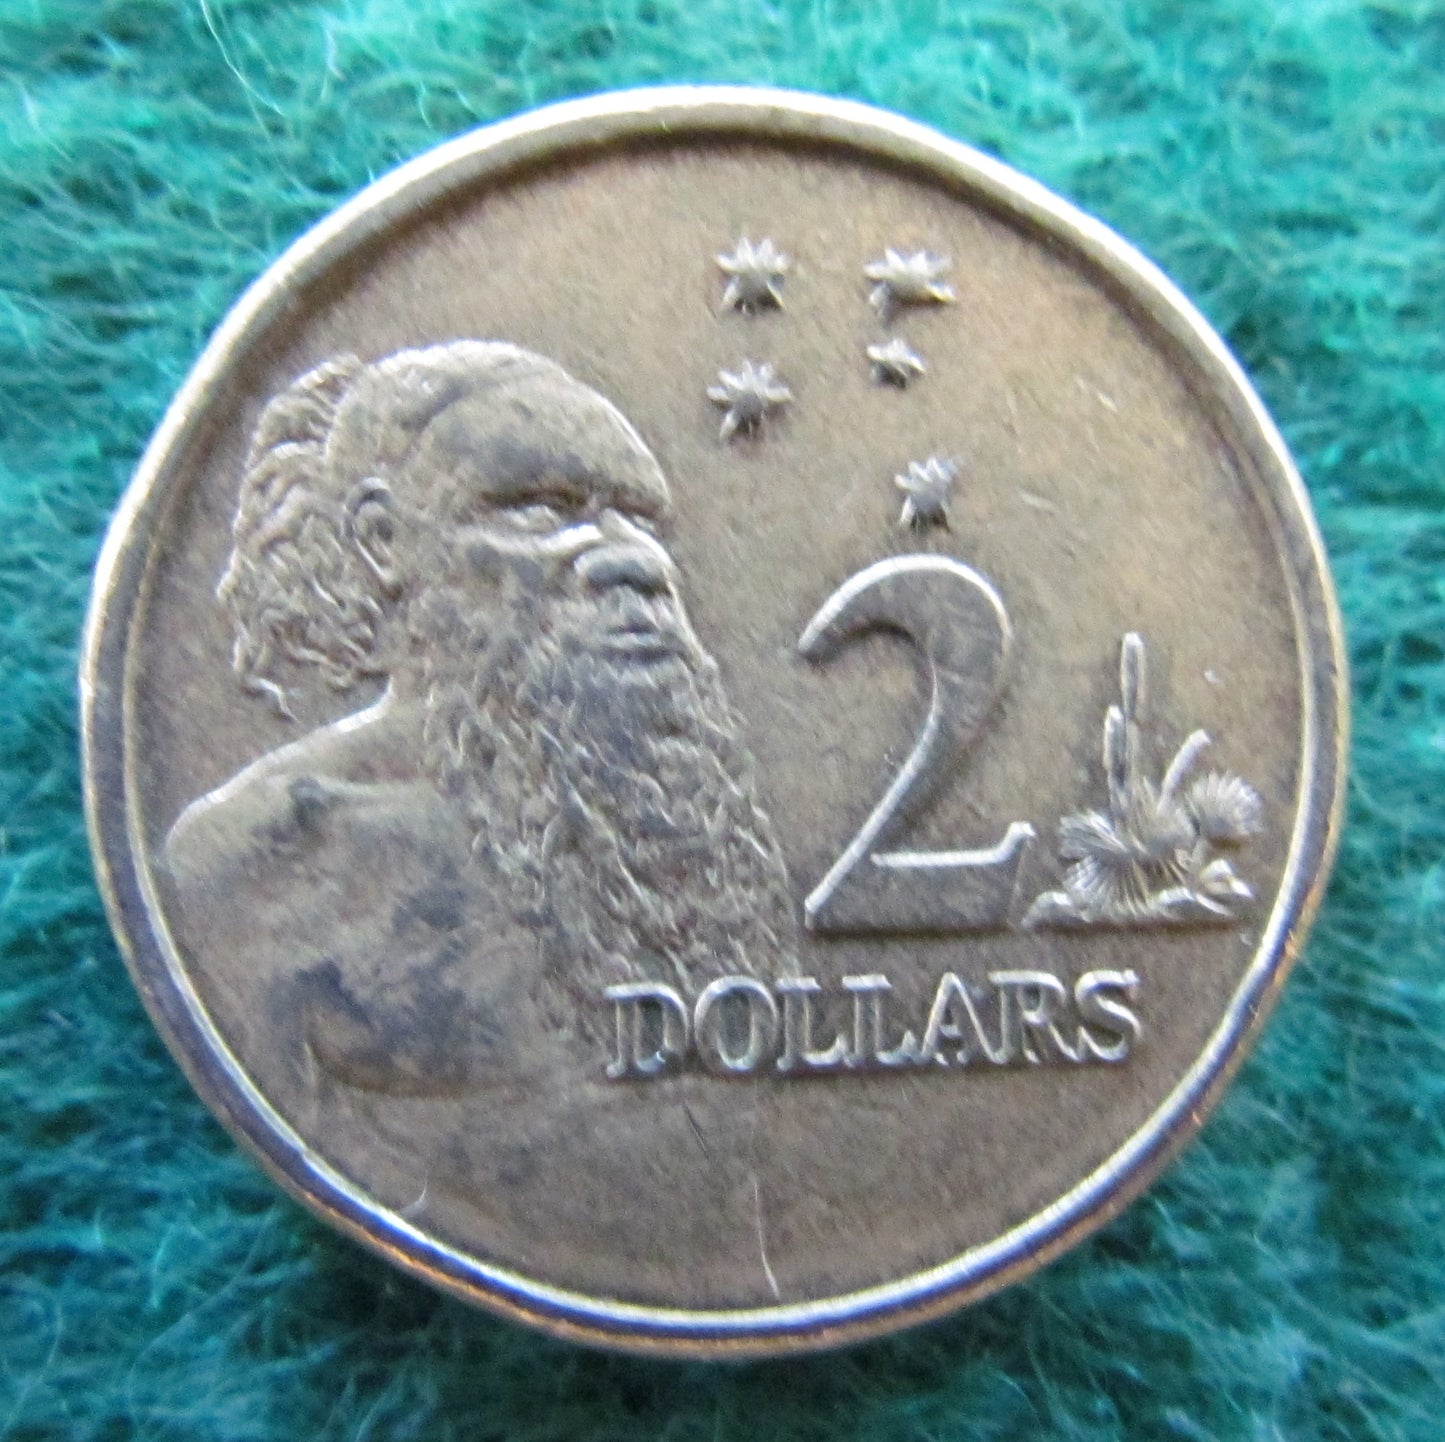 Australian 1994 2 Dollar Aboriginal Elder Queen Elizabeth Coin - Circulated